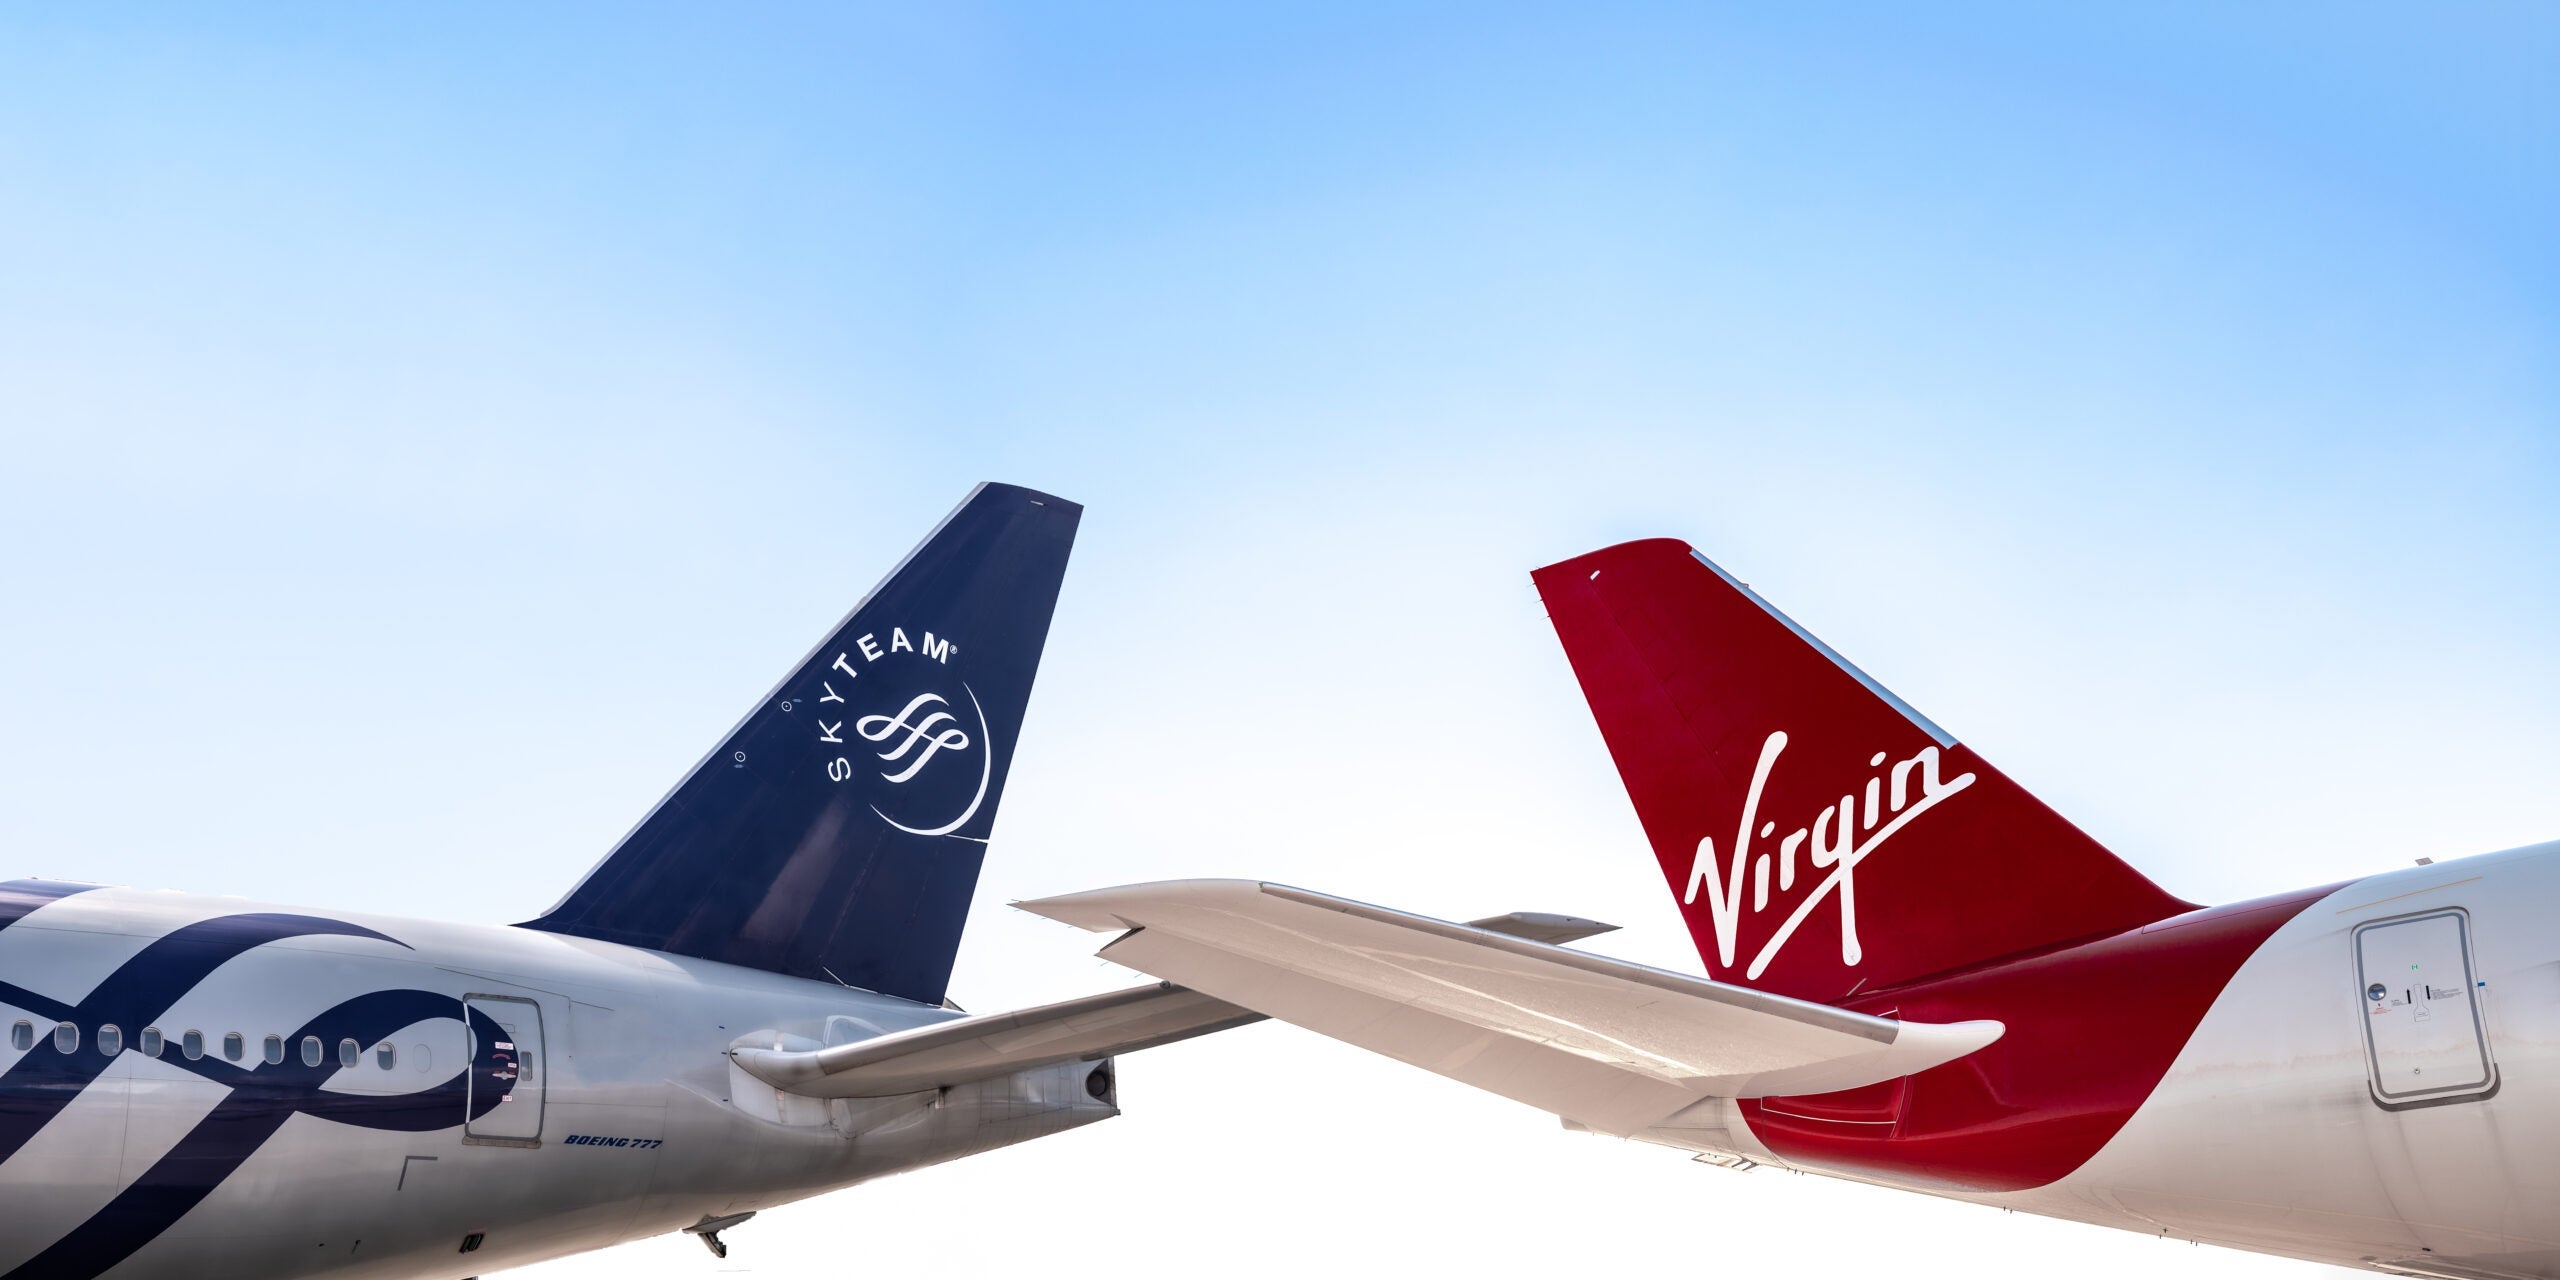 Big news: Virgin Atlantic is joining SkyTeam alliance